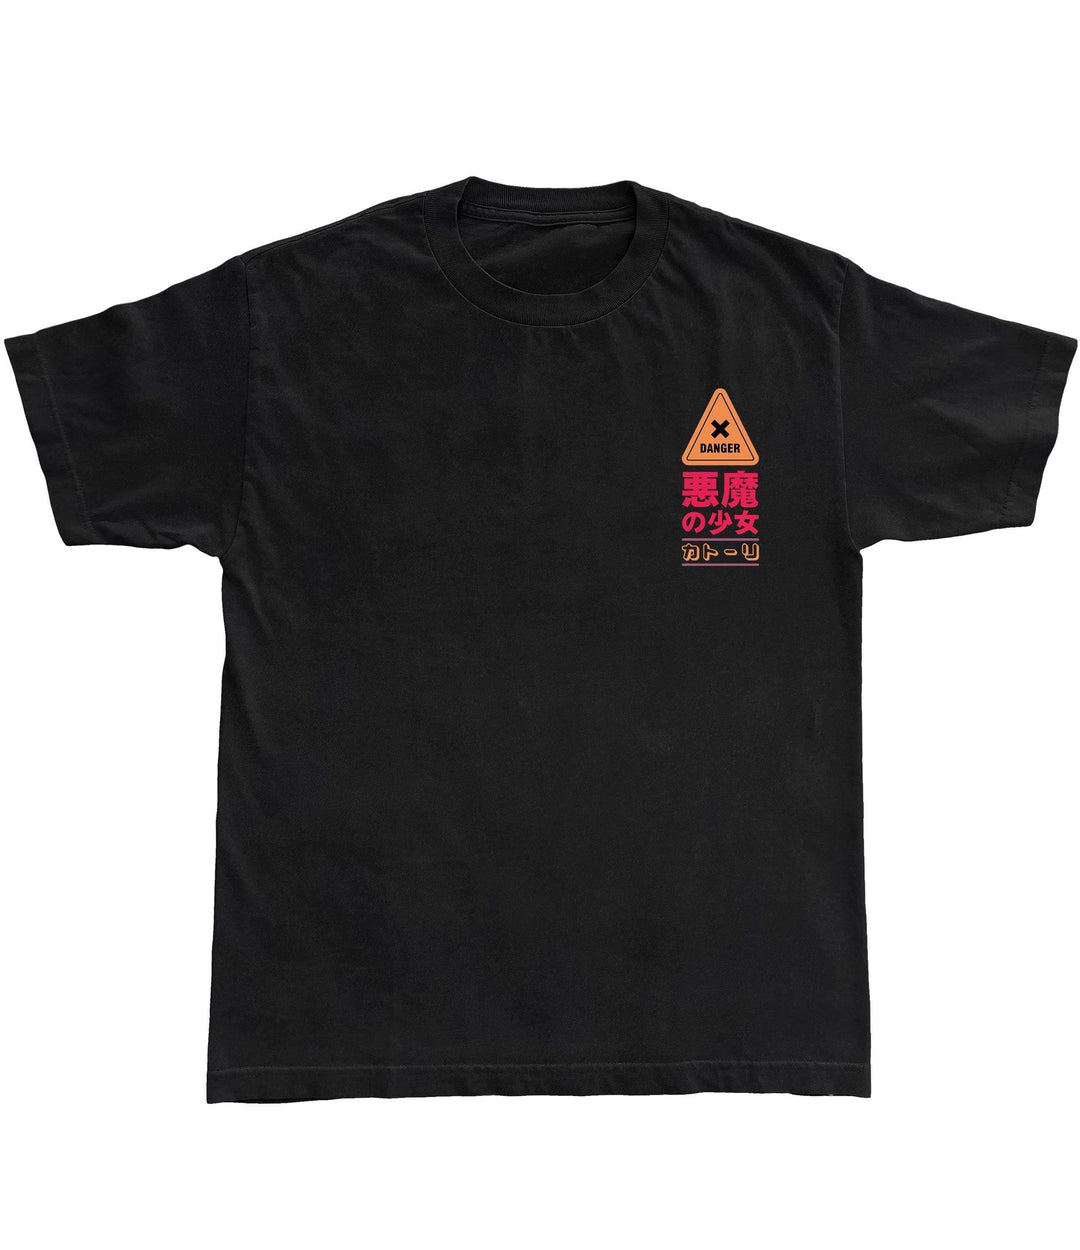 Danger Girl T-Shirt at Catori Clothing | Graphic & Anime Tees, Hoodies & Sweatshirts 